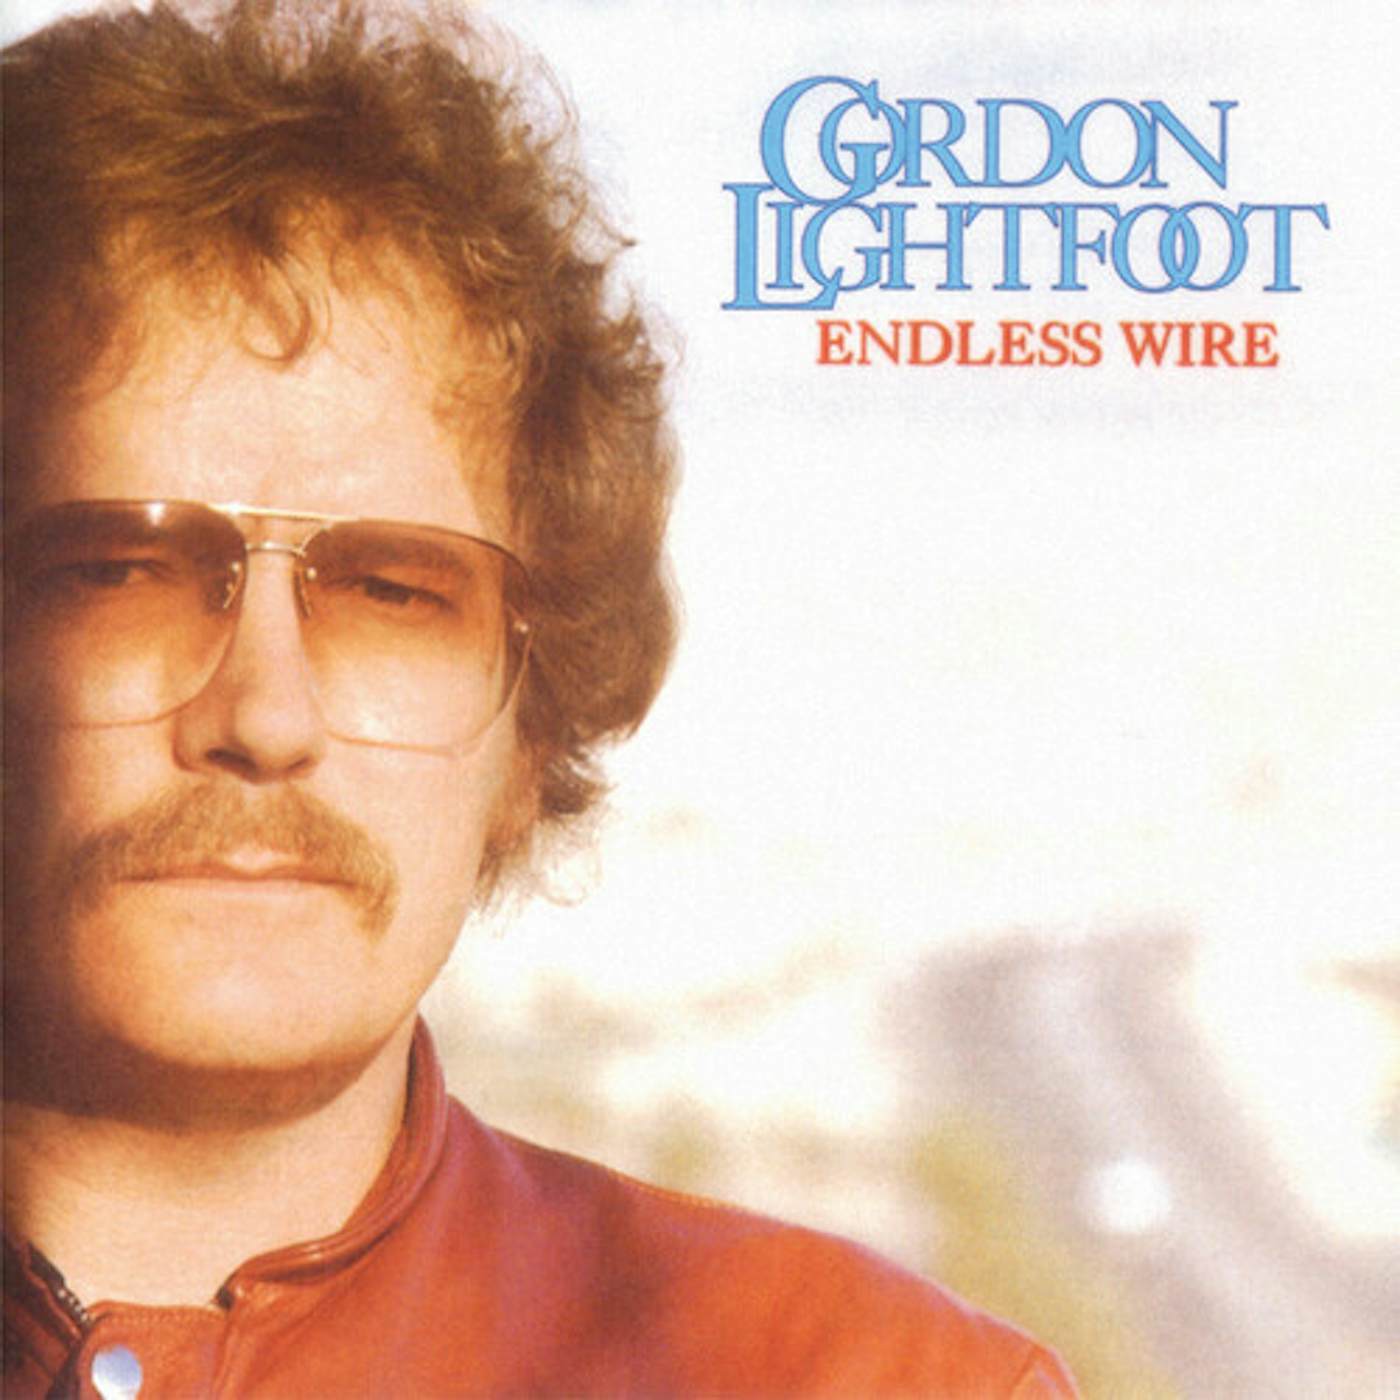 Gordon Lightfoot ENDLESS WIRE CD